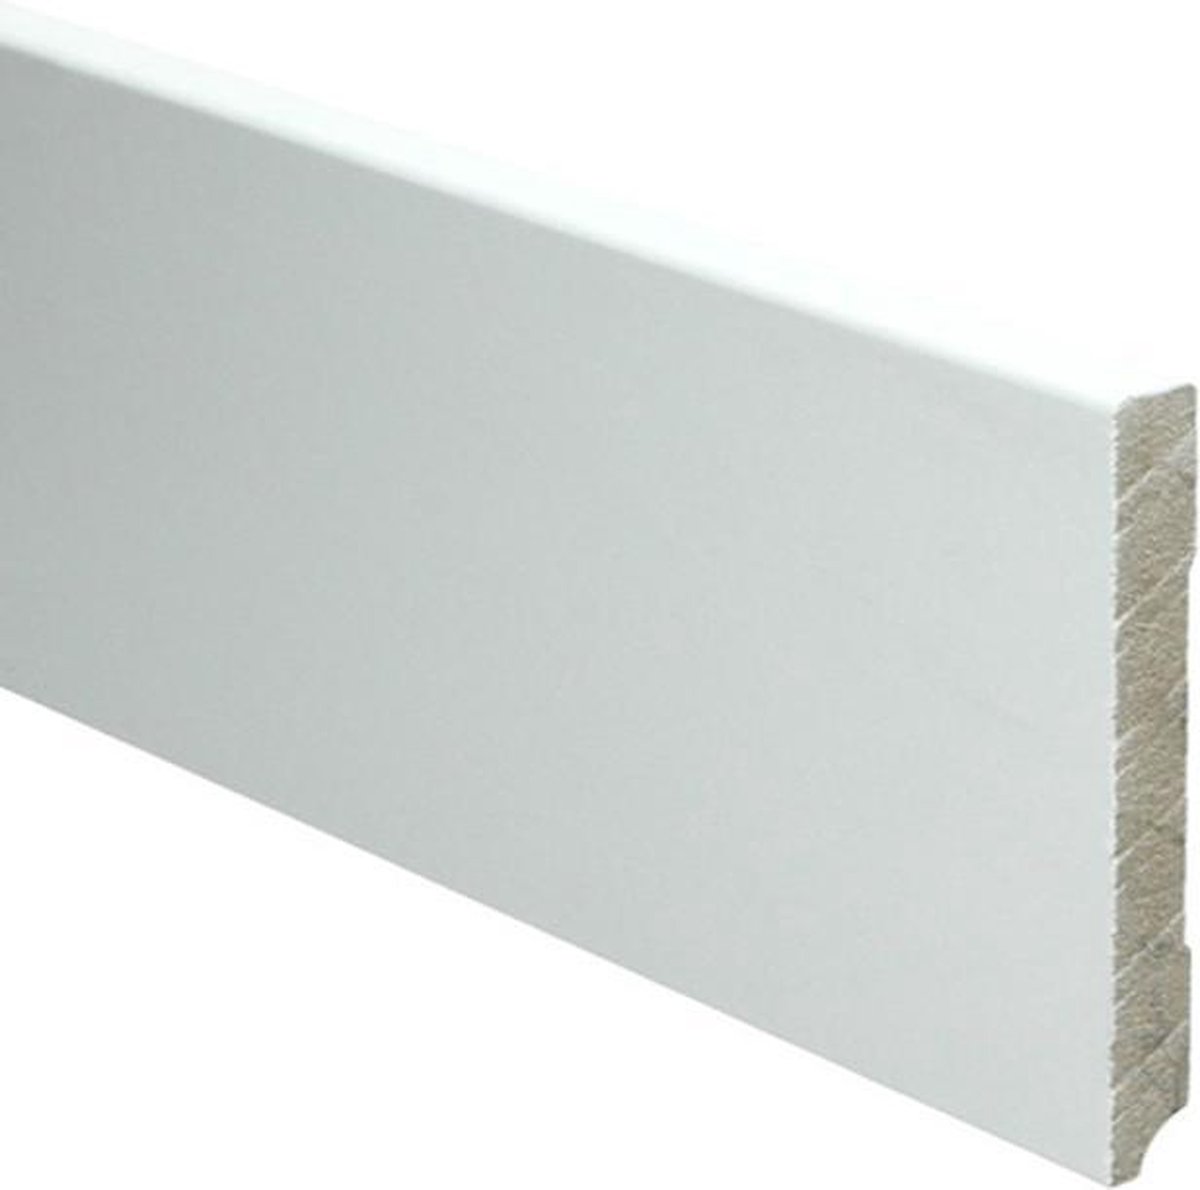 Hoge plinten - MDF - Moderne plint 120x18 mm - Wit - Voorgelakt - RAL 9016 - Per 5 stuks 2,4m